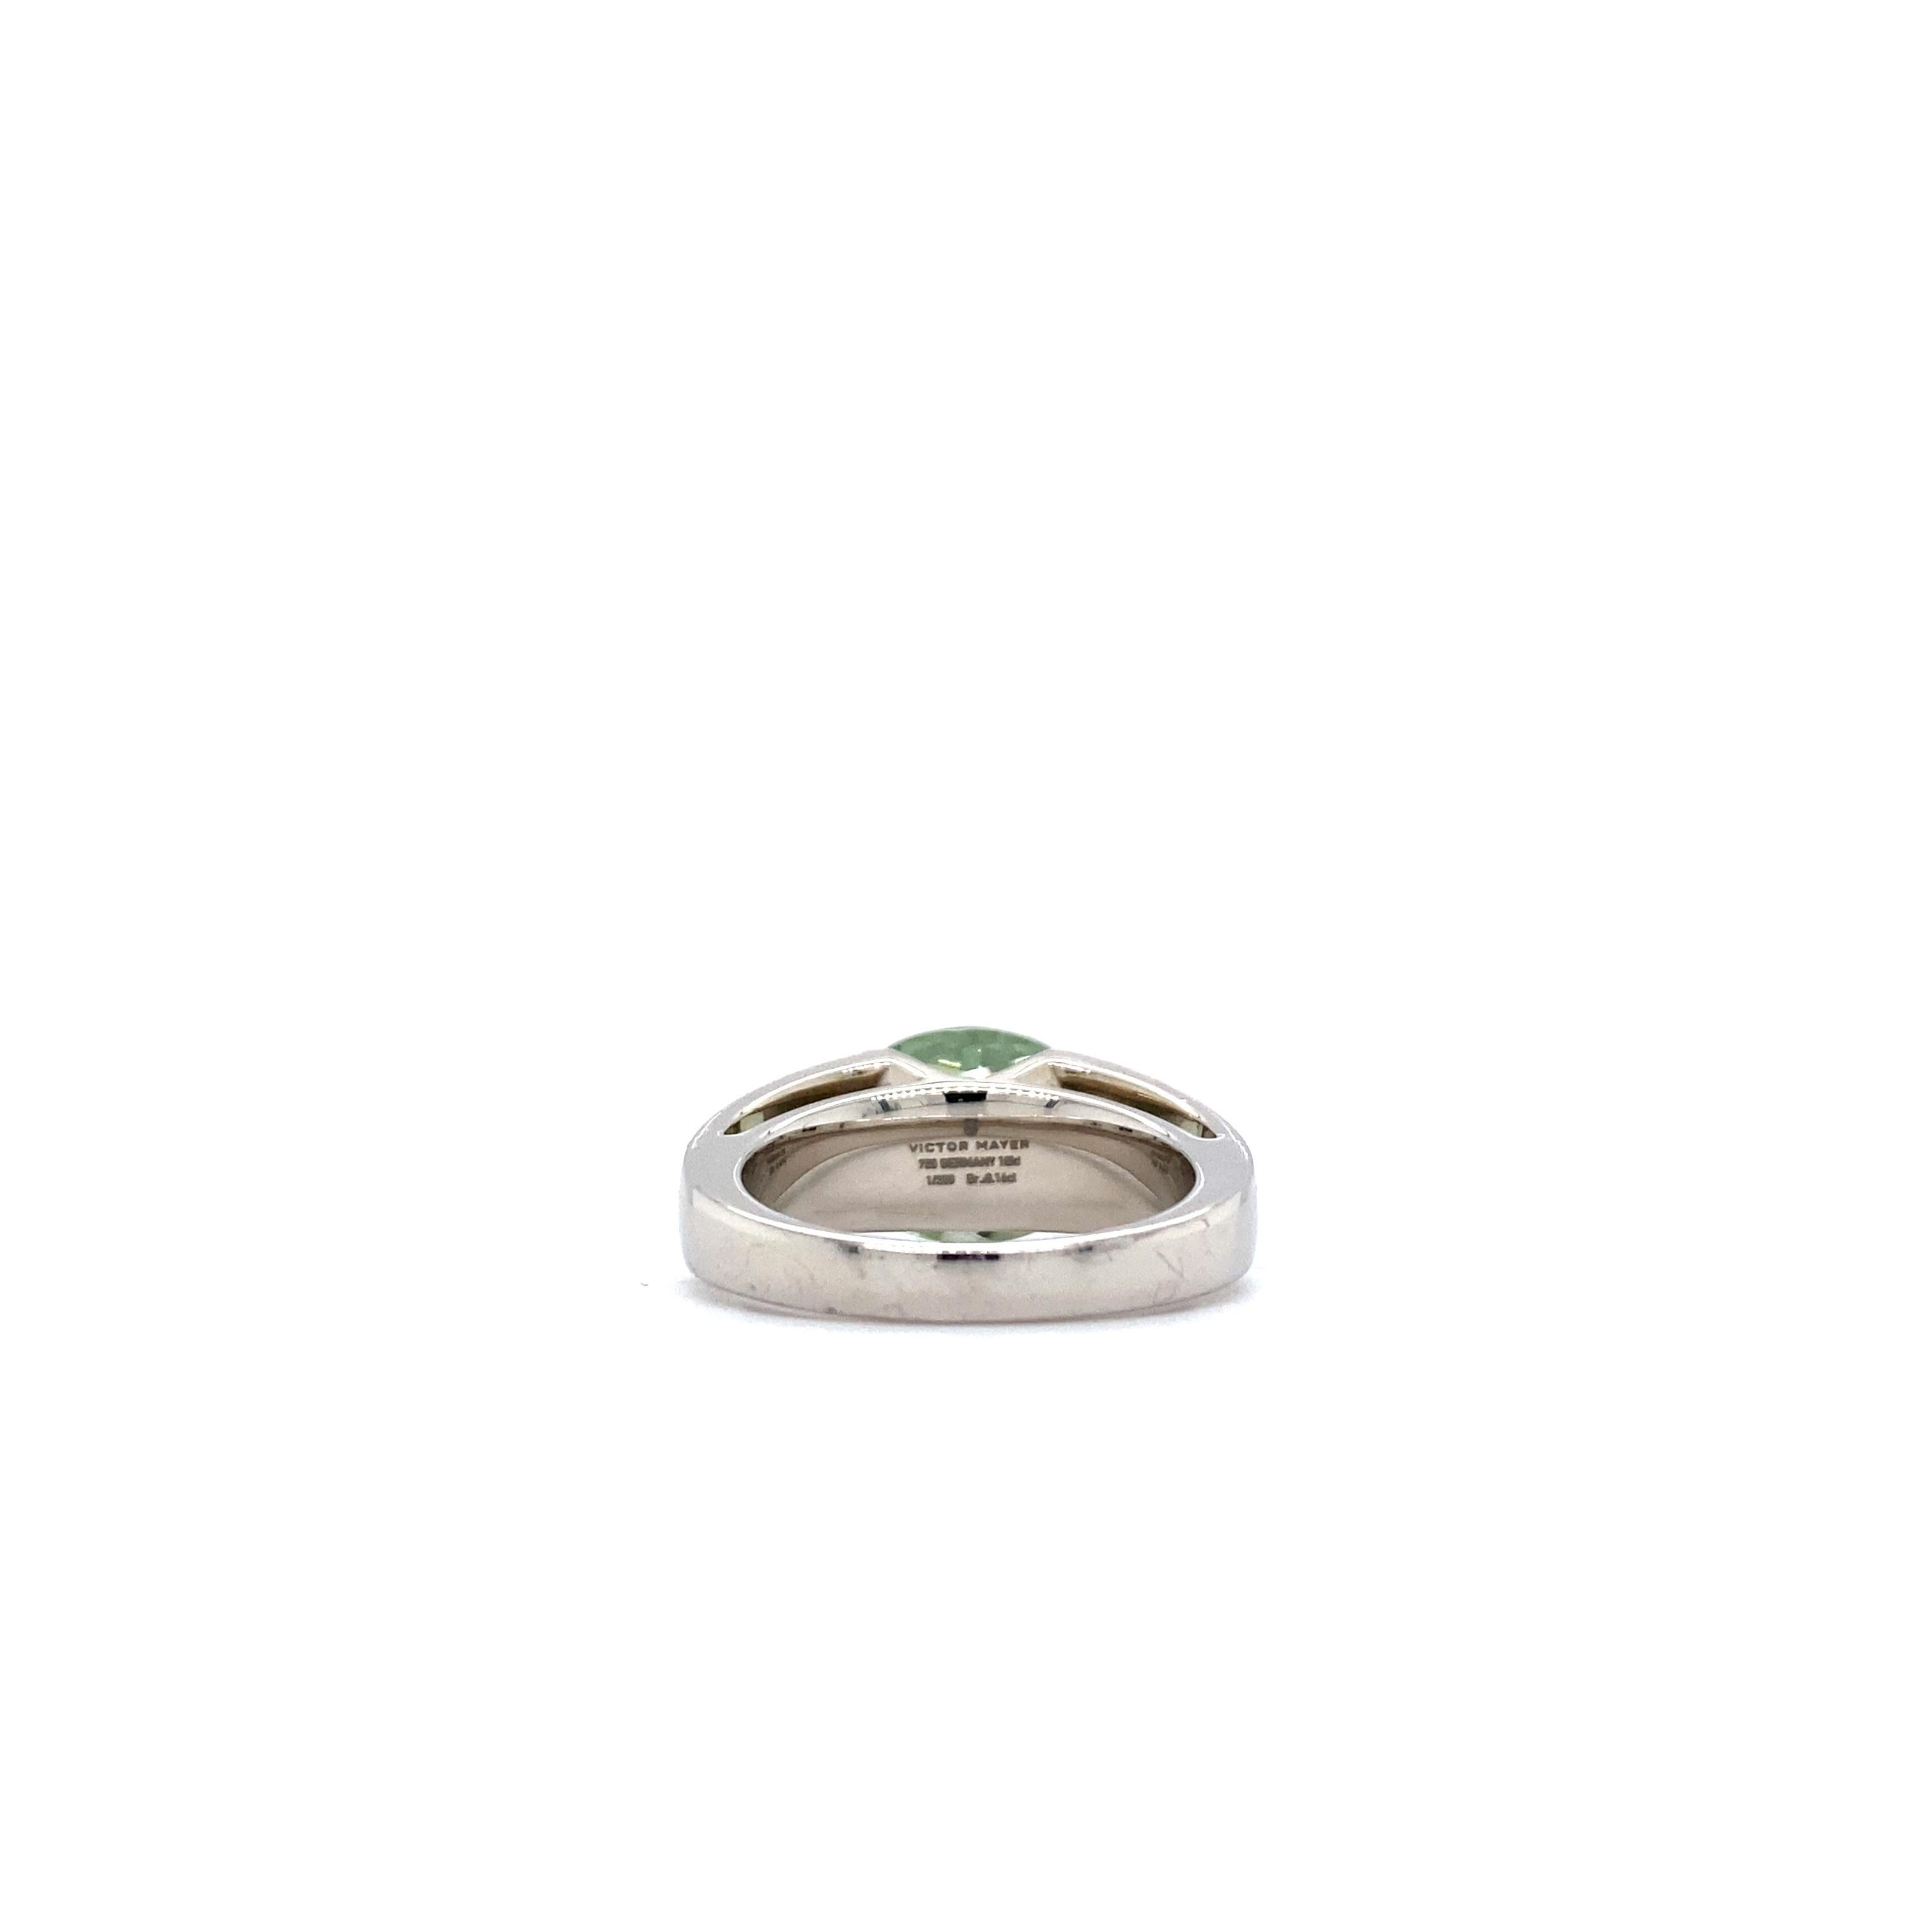 Victor Mayer Ring Peacock Silver Enamel 18k White Gold 8 Diamonds 0.16 ct  For Sale 1